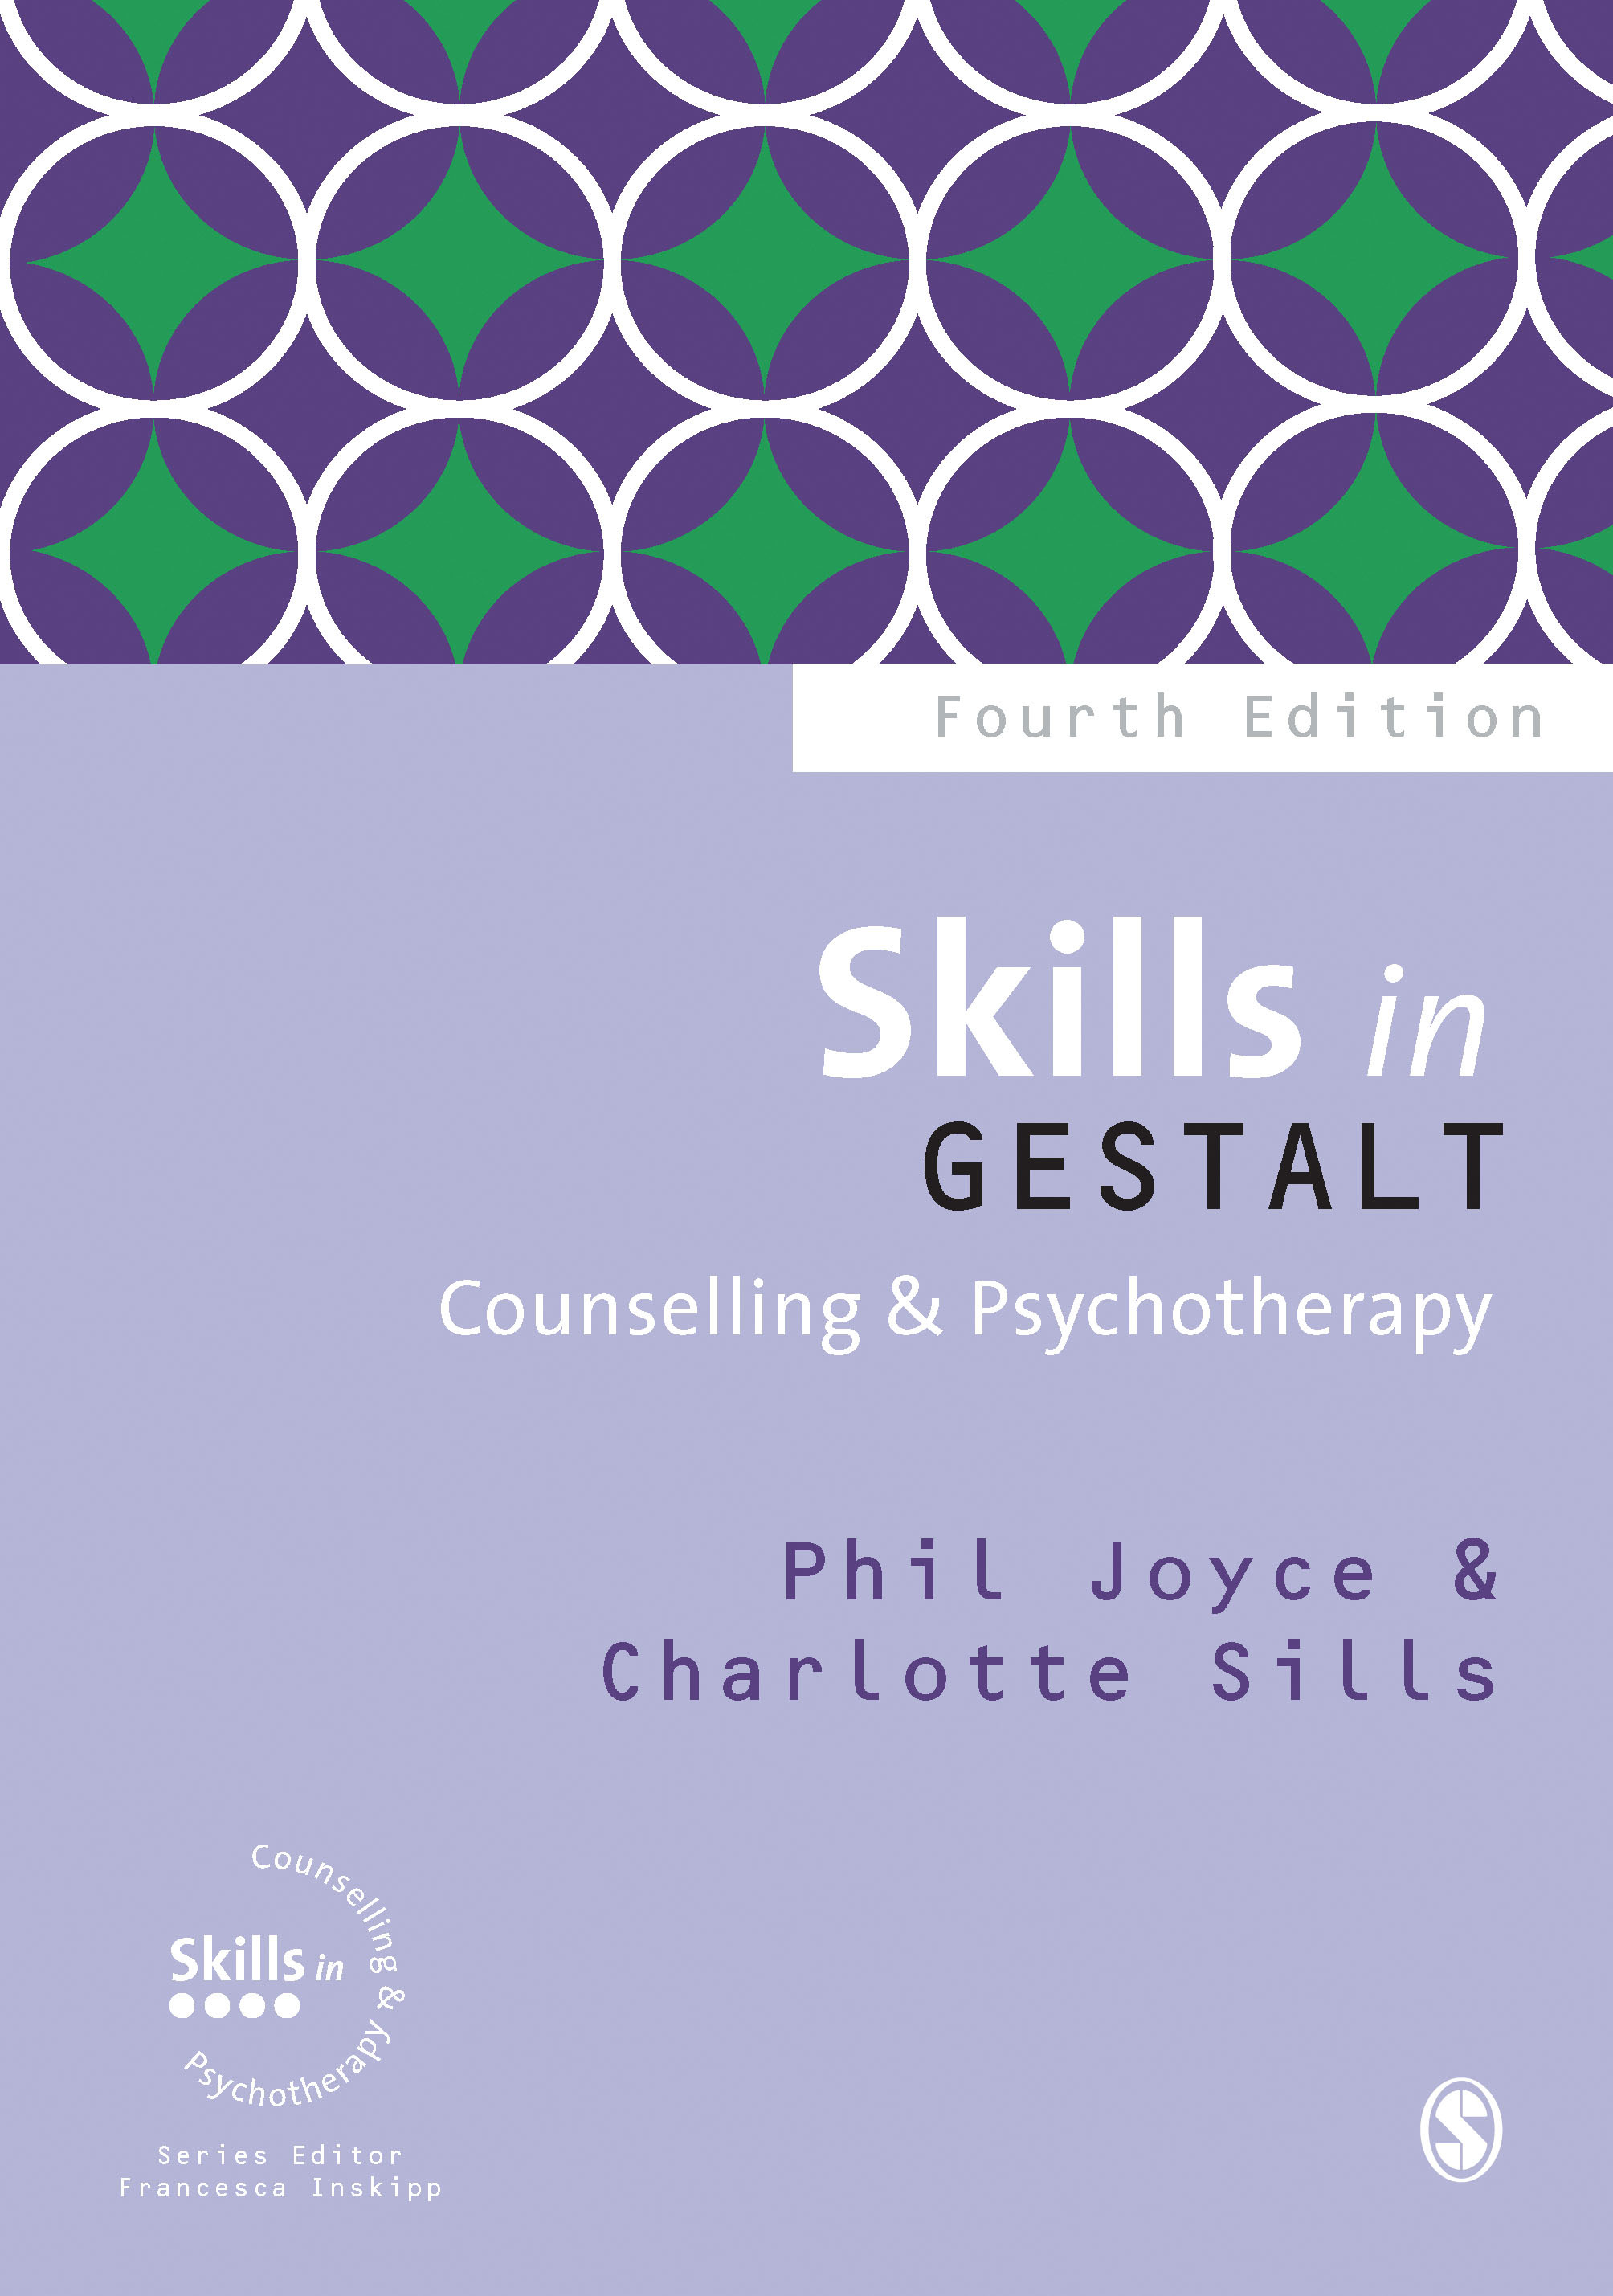 Skills in Gestalt book cover image 